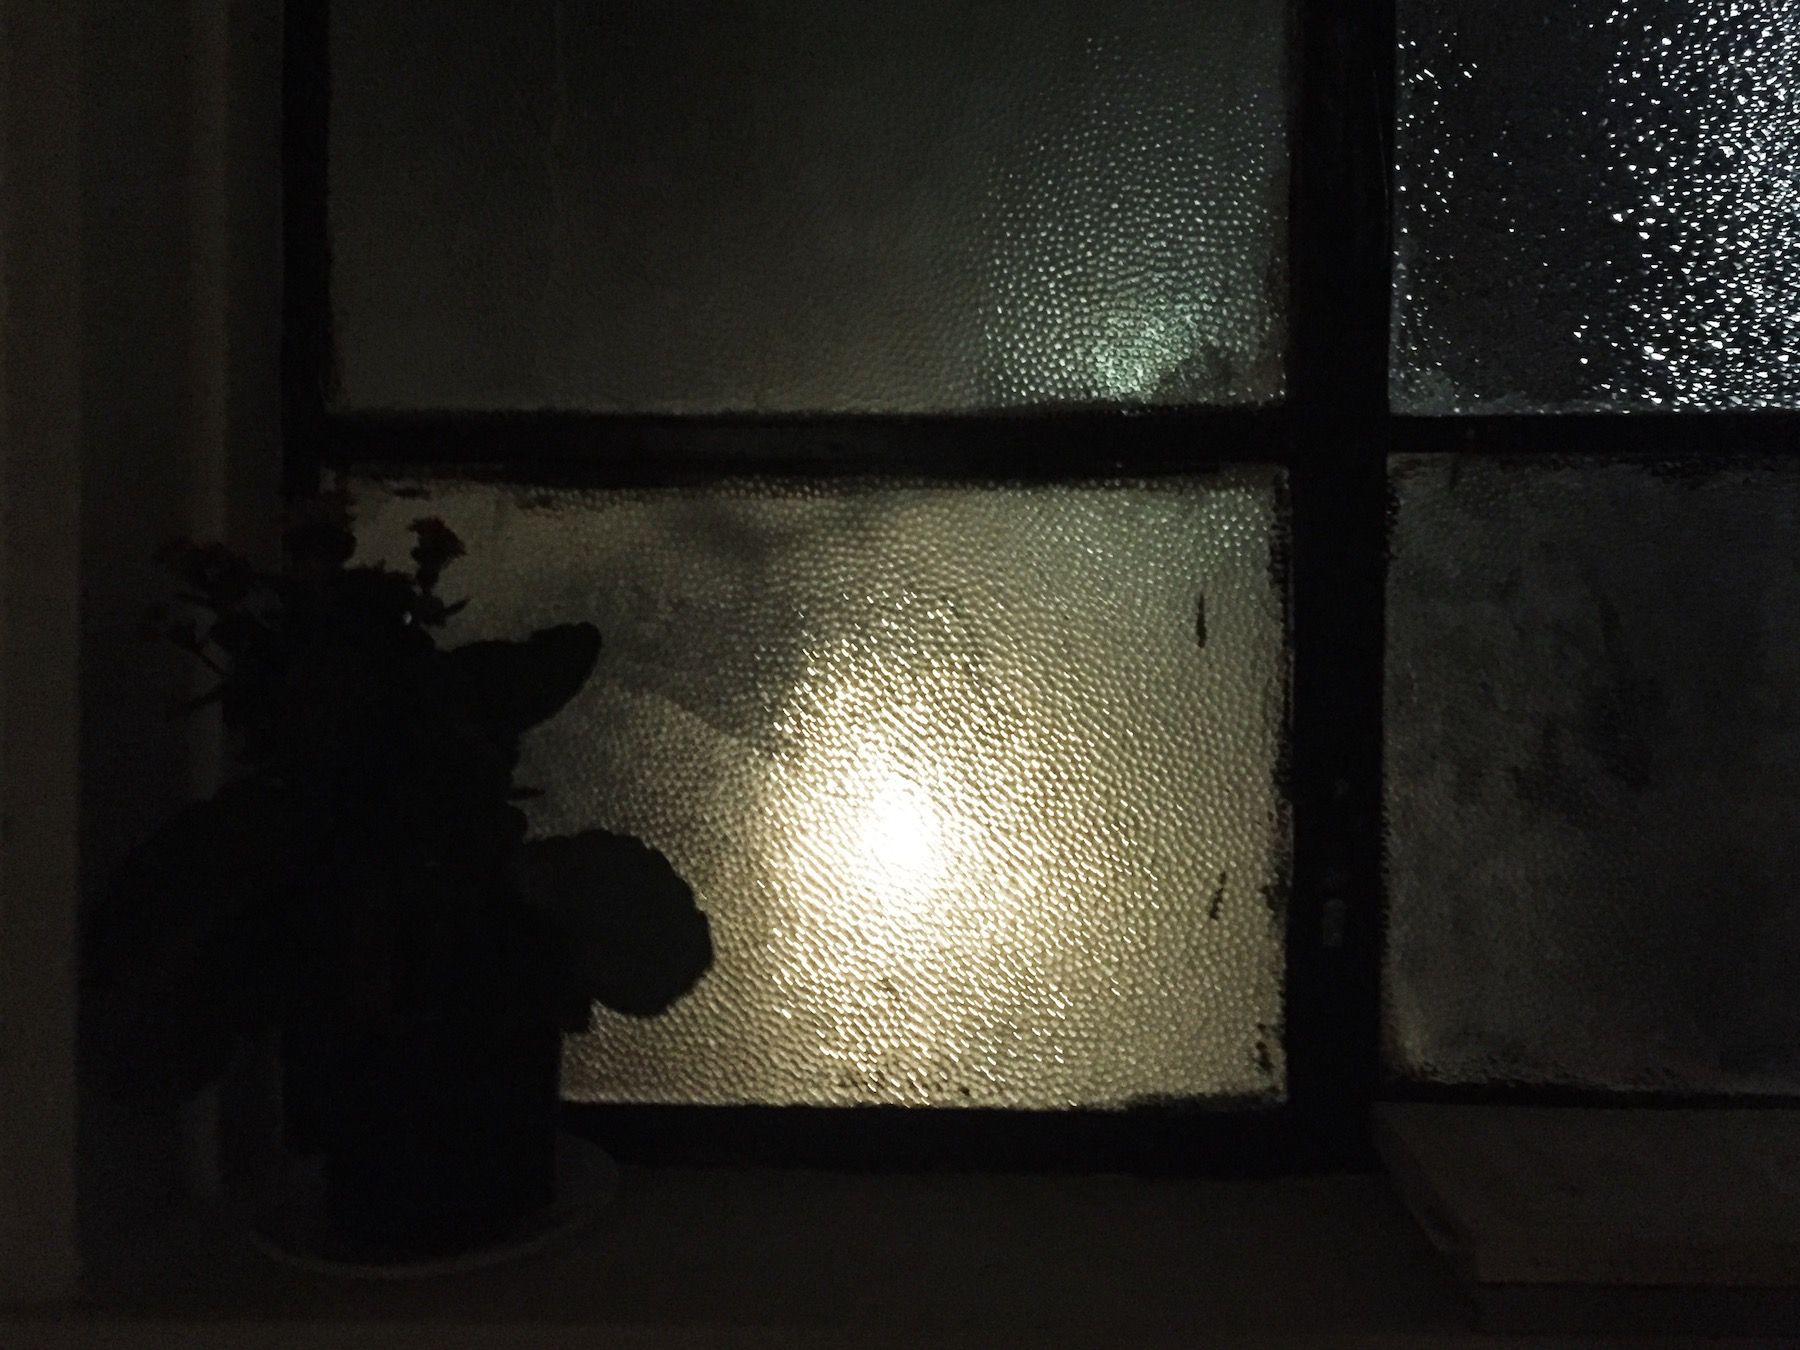 Night shot. Street lamp through textured glass window.